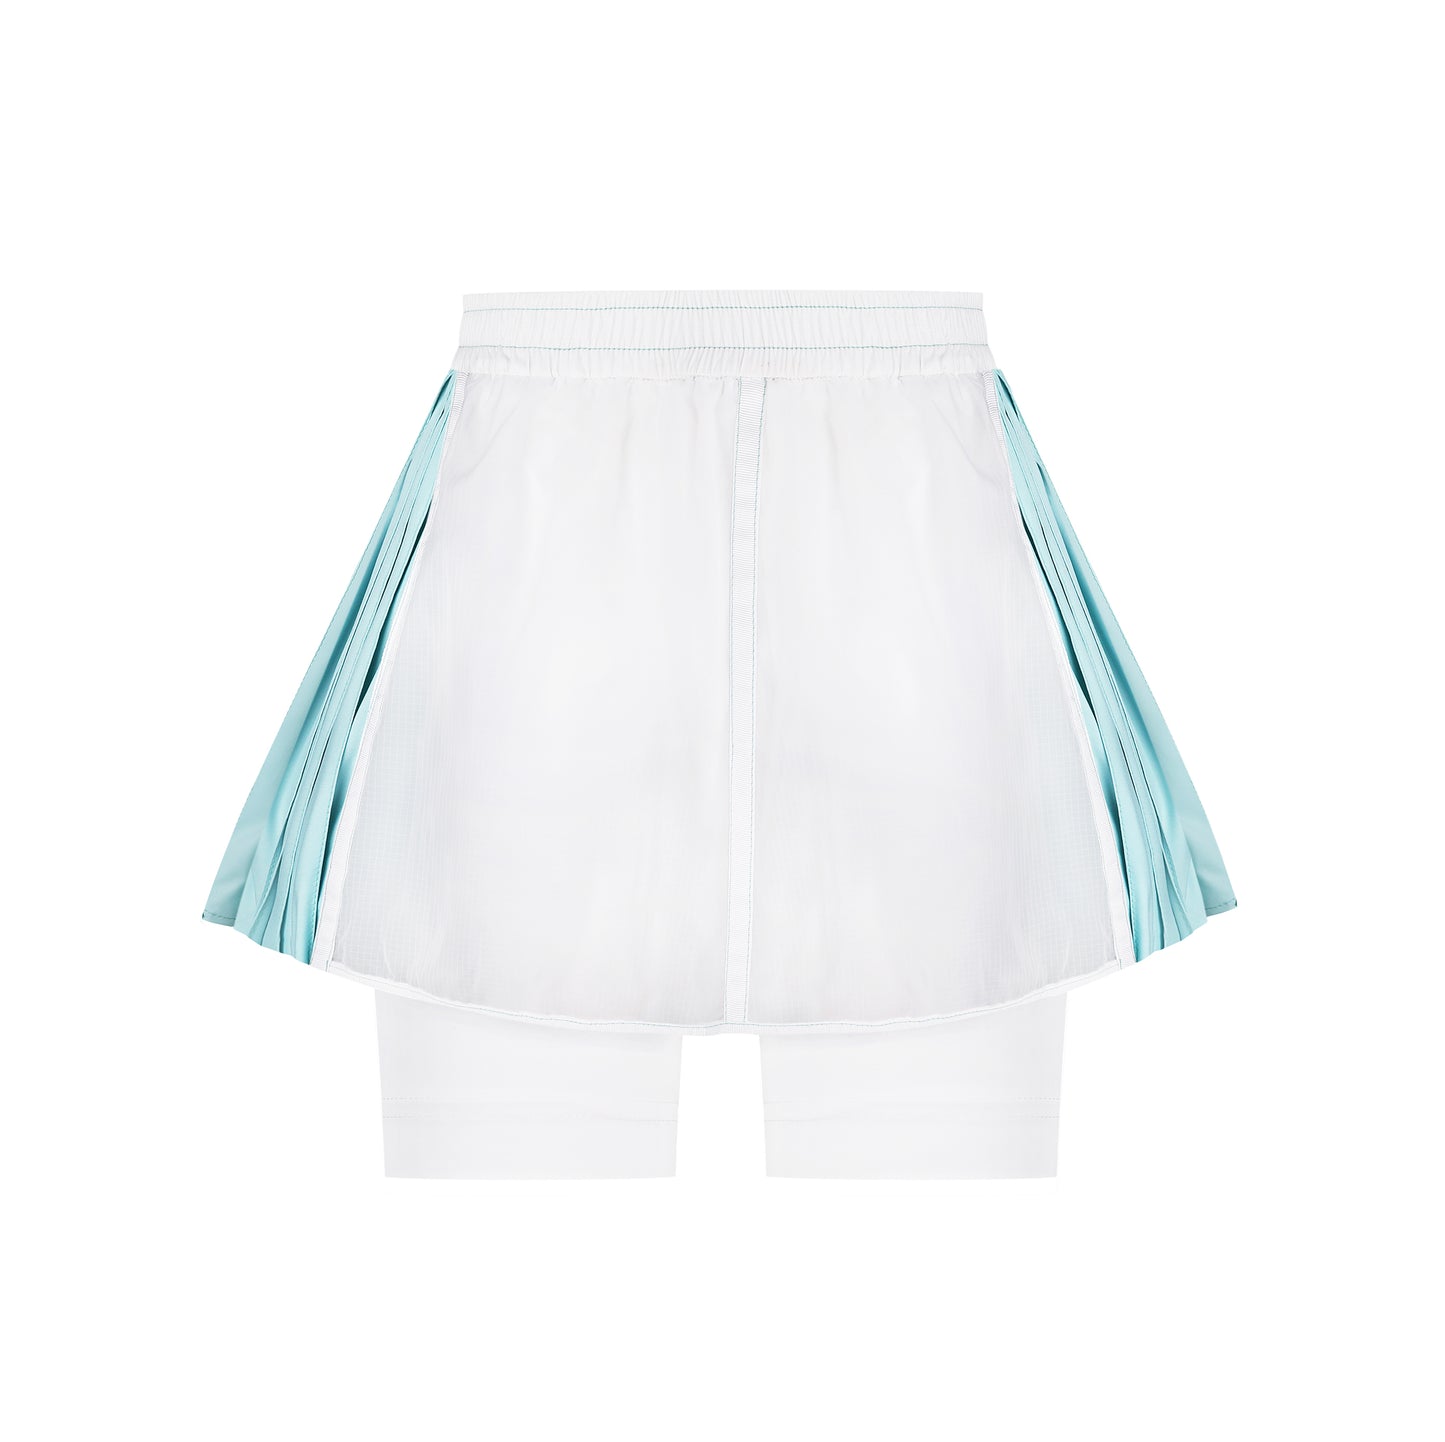 Stylish skirt shorts from REwind, Ukraine